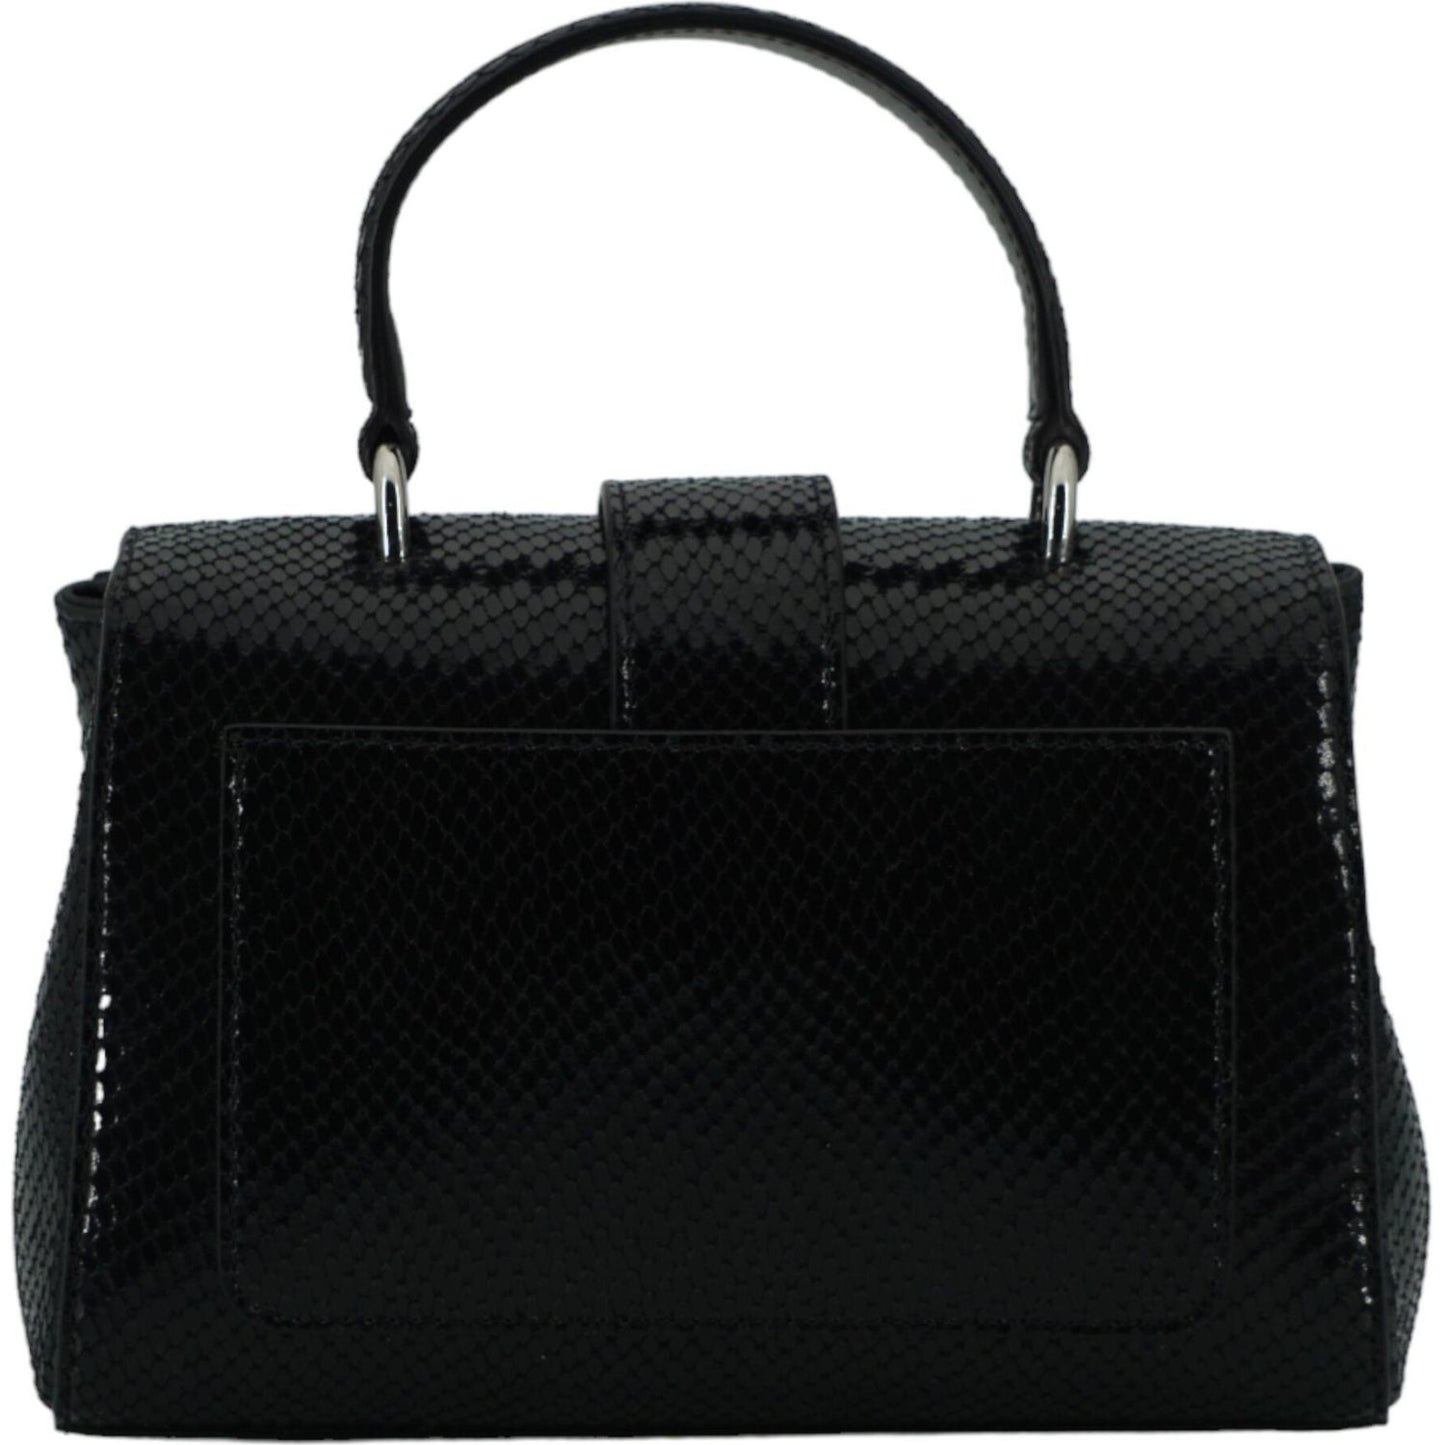 Jimmy Choo Black Leather Top Handle Shoulder Bag black-leather-top-handle-shoulder-bag